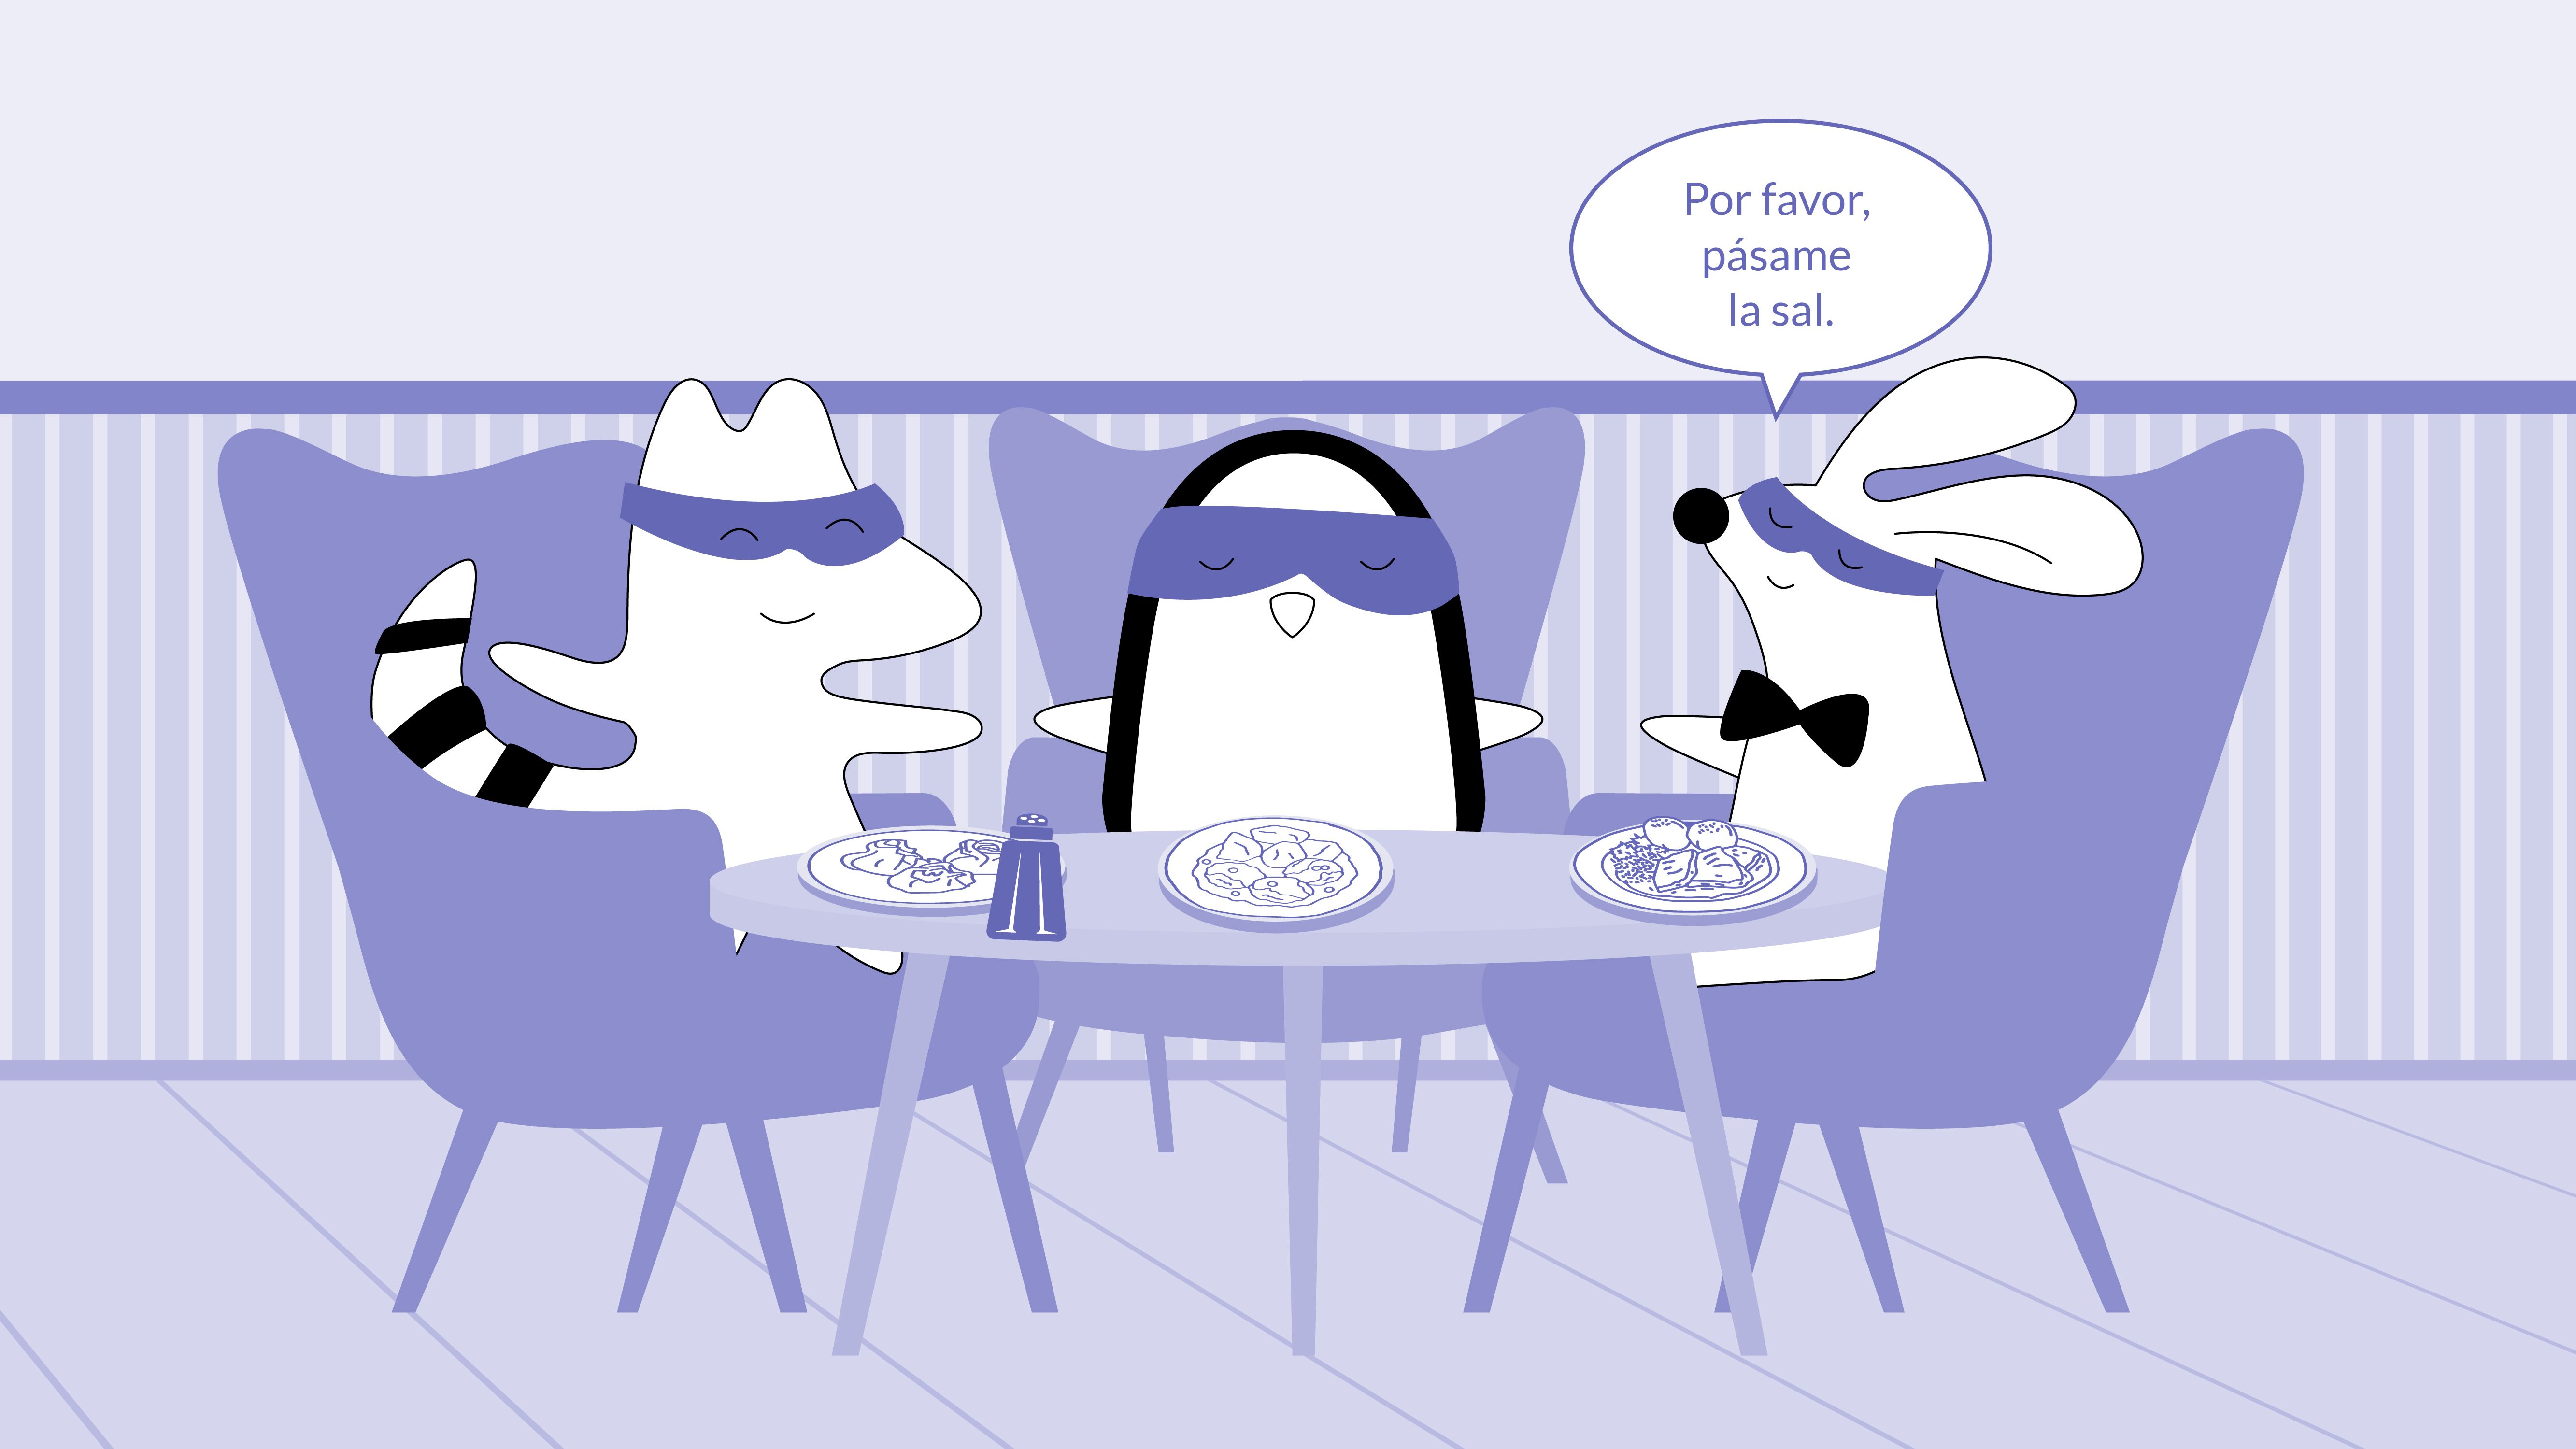 Benji, Iggy, and Soren are eating at the restaurant. Benji asks for the salt, saying, “Por favor, pásame la sal.”